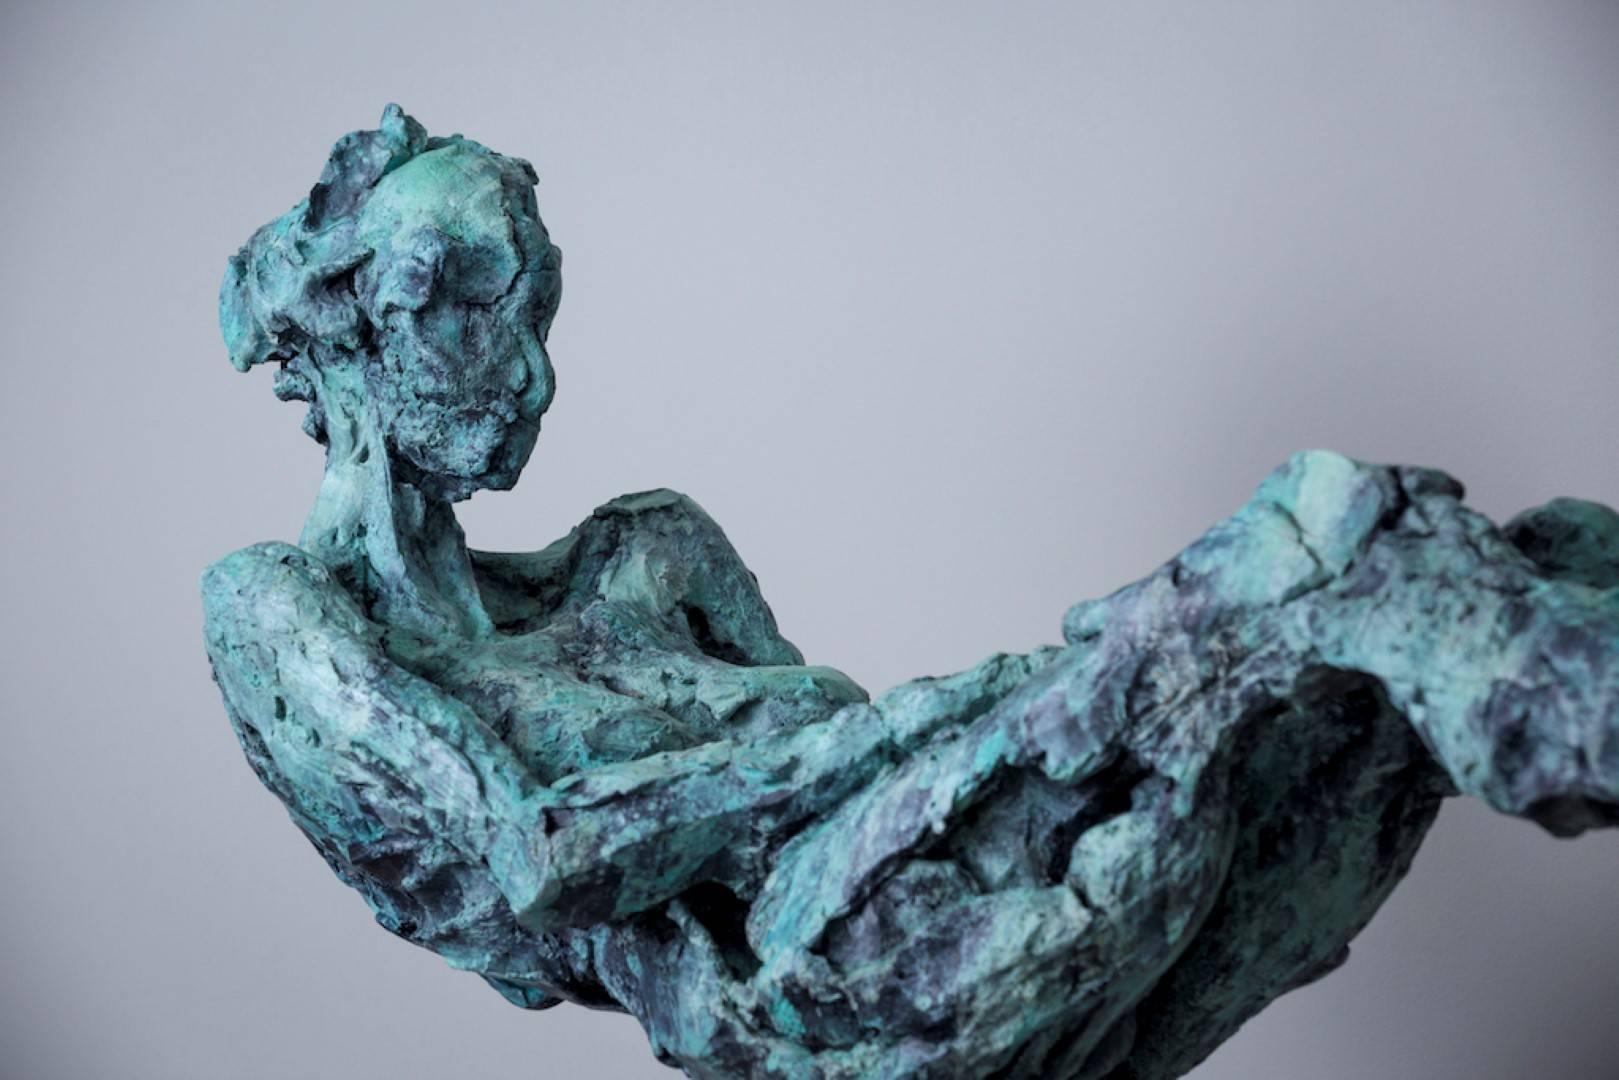 Arethusa immerses herself in the Alpheus river  - figurative, bronze statuette - Sculpture by Richard Tosczak